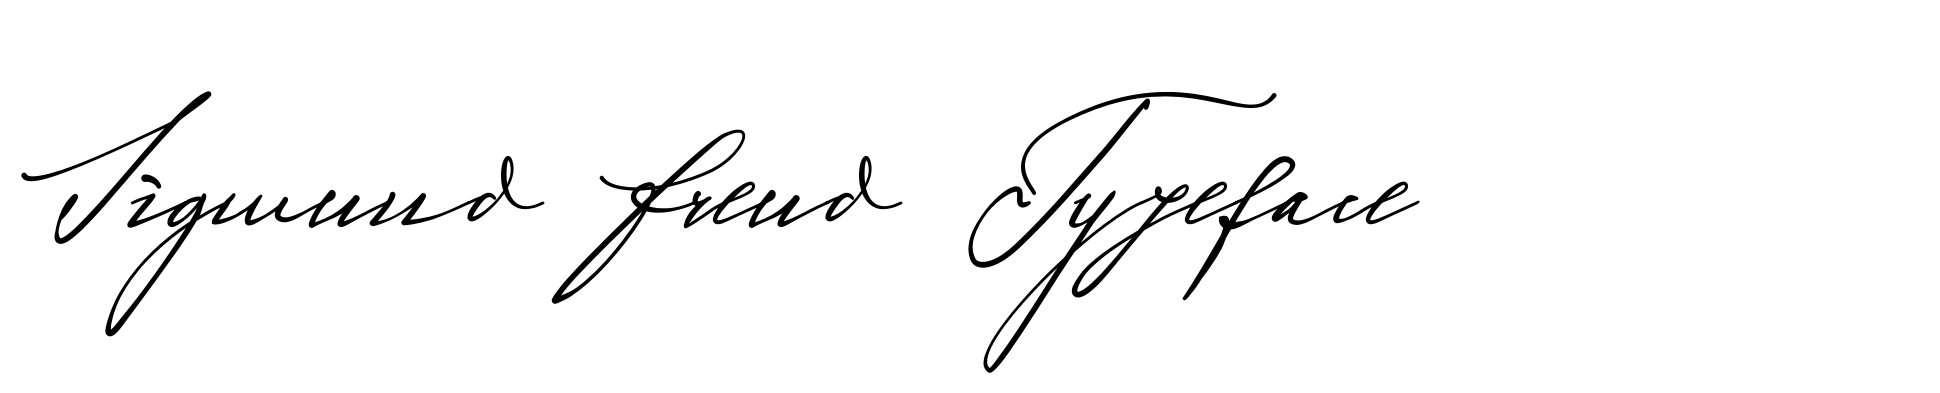 Sigmund Freud Typeface